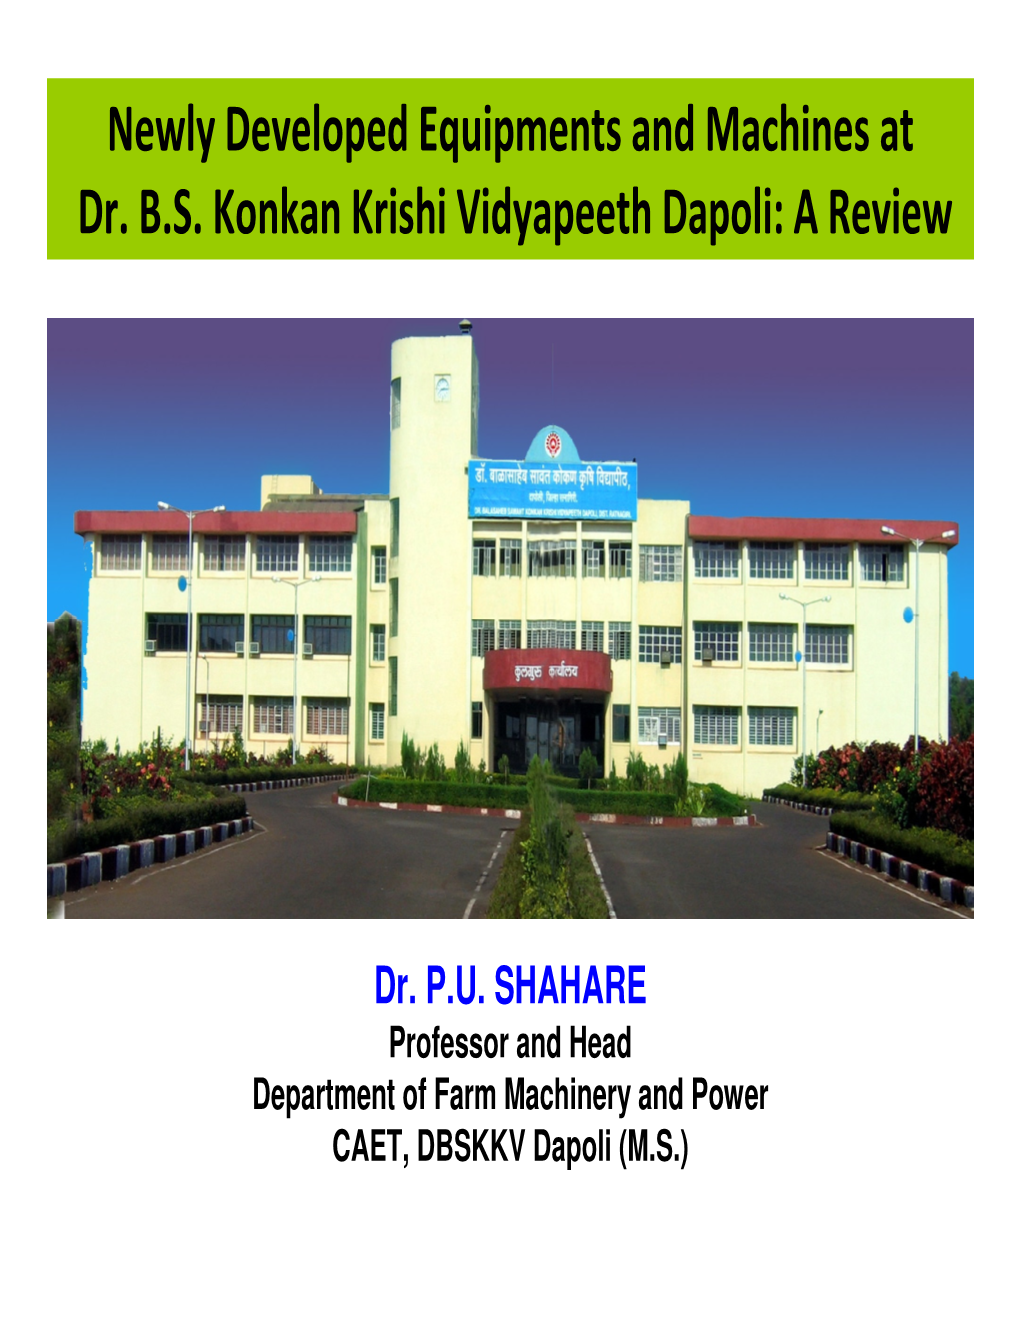 Newly Developed Equipments and Machines at Dr. B.S. Konkan Krishi Vidyapeeth Dapoli: a Review